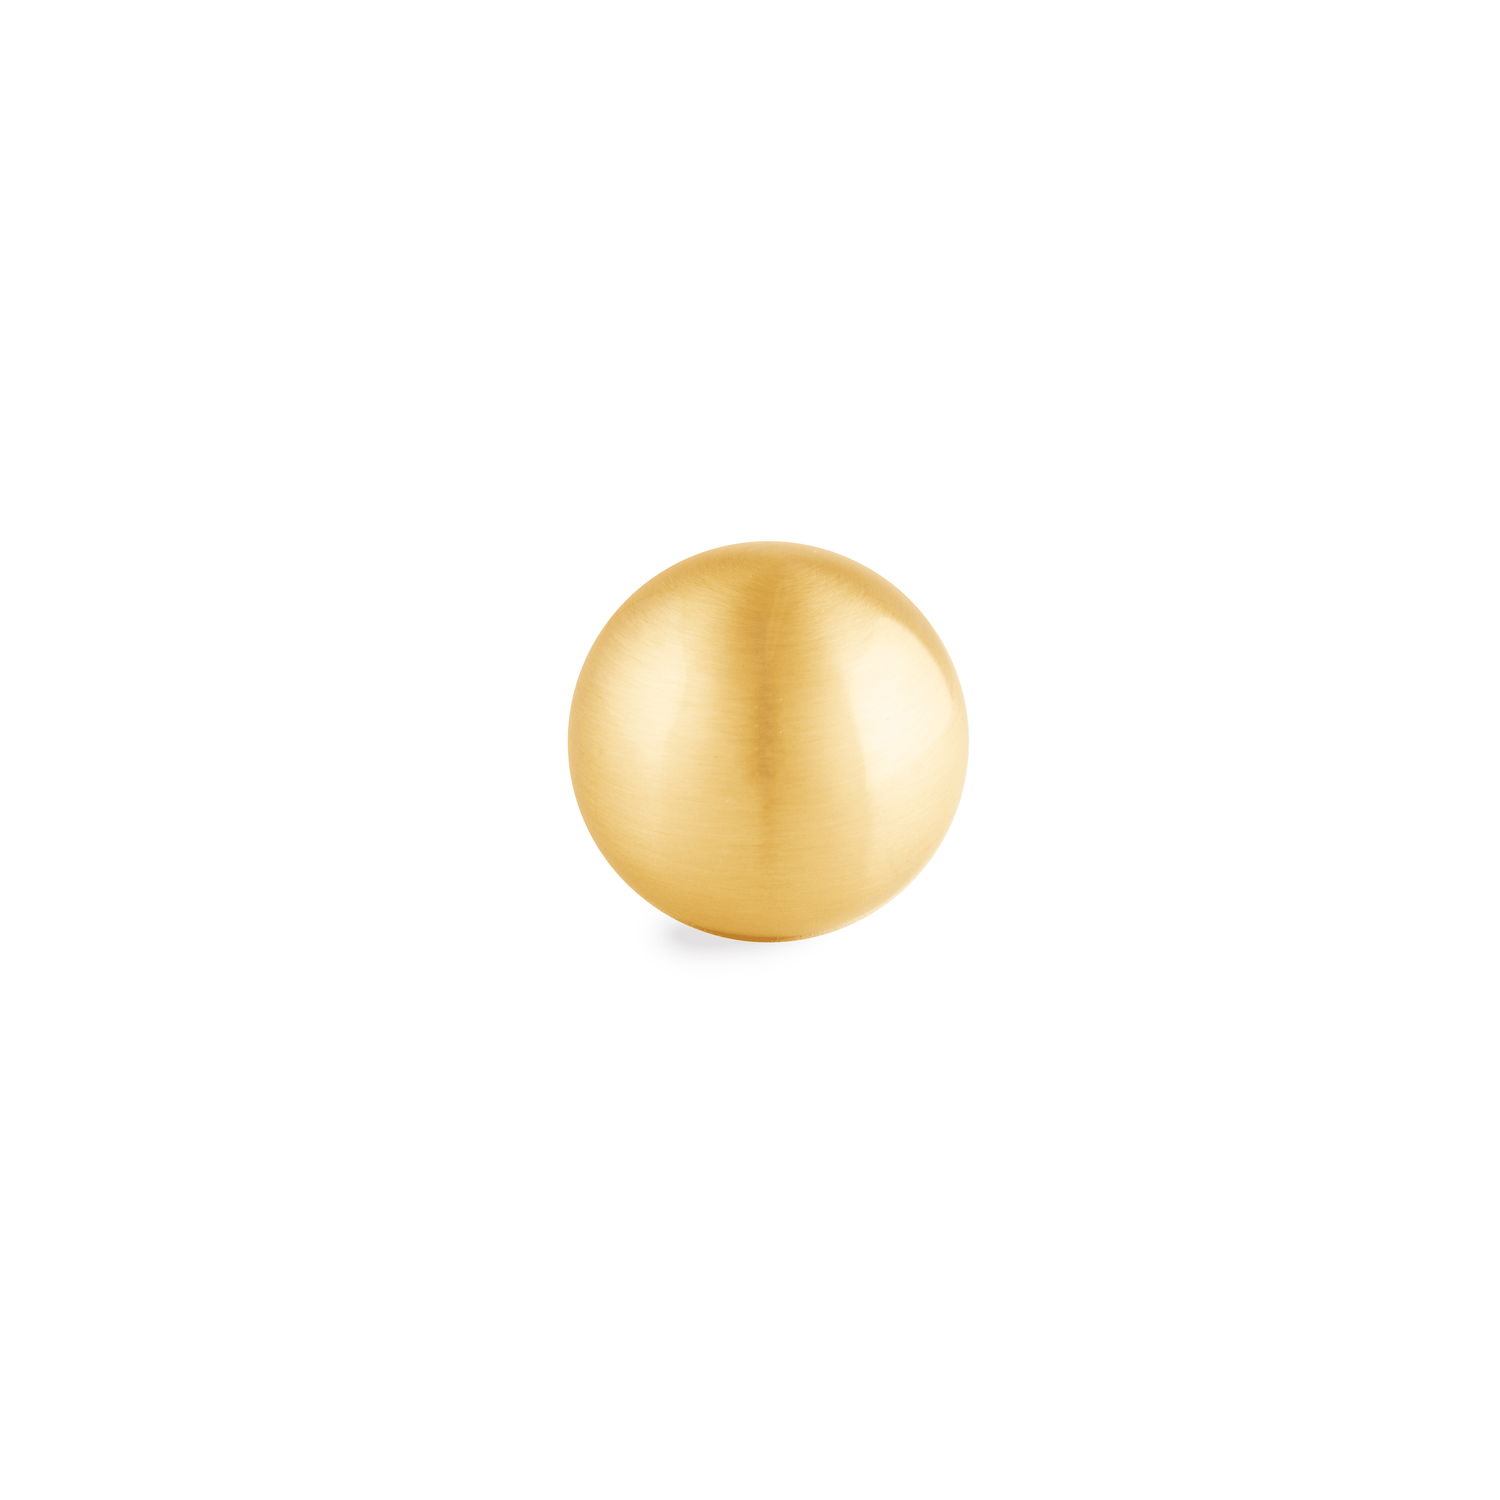 Zenith Knob Knob 20mm / Gold / Brass - M A N T A R A